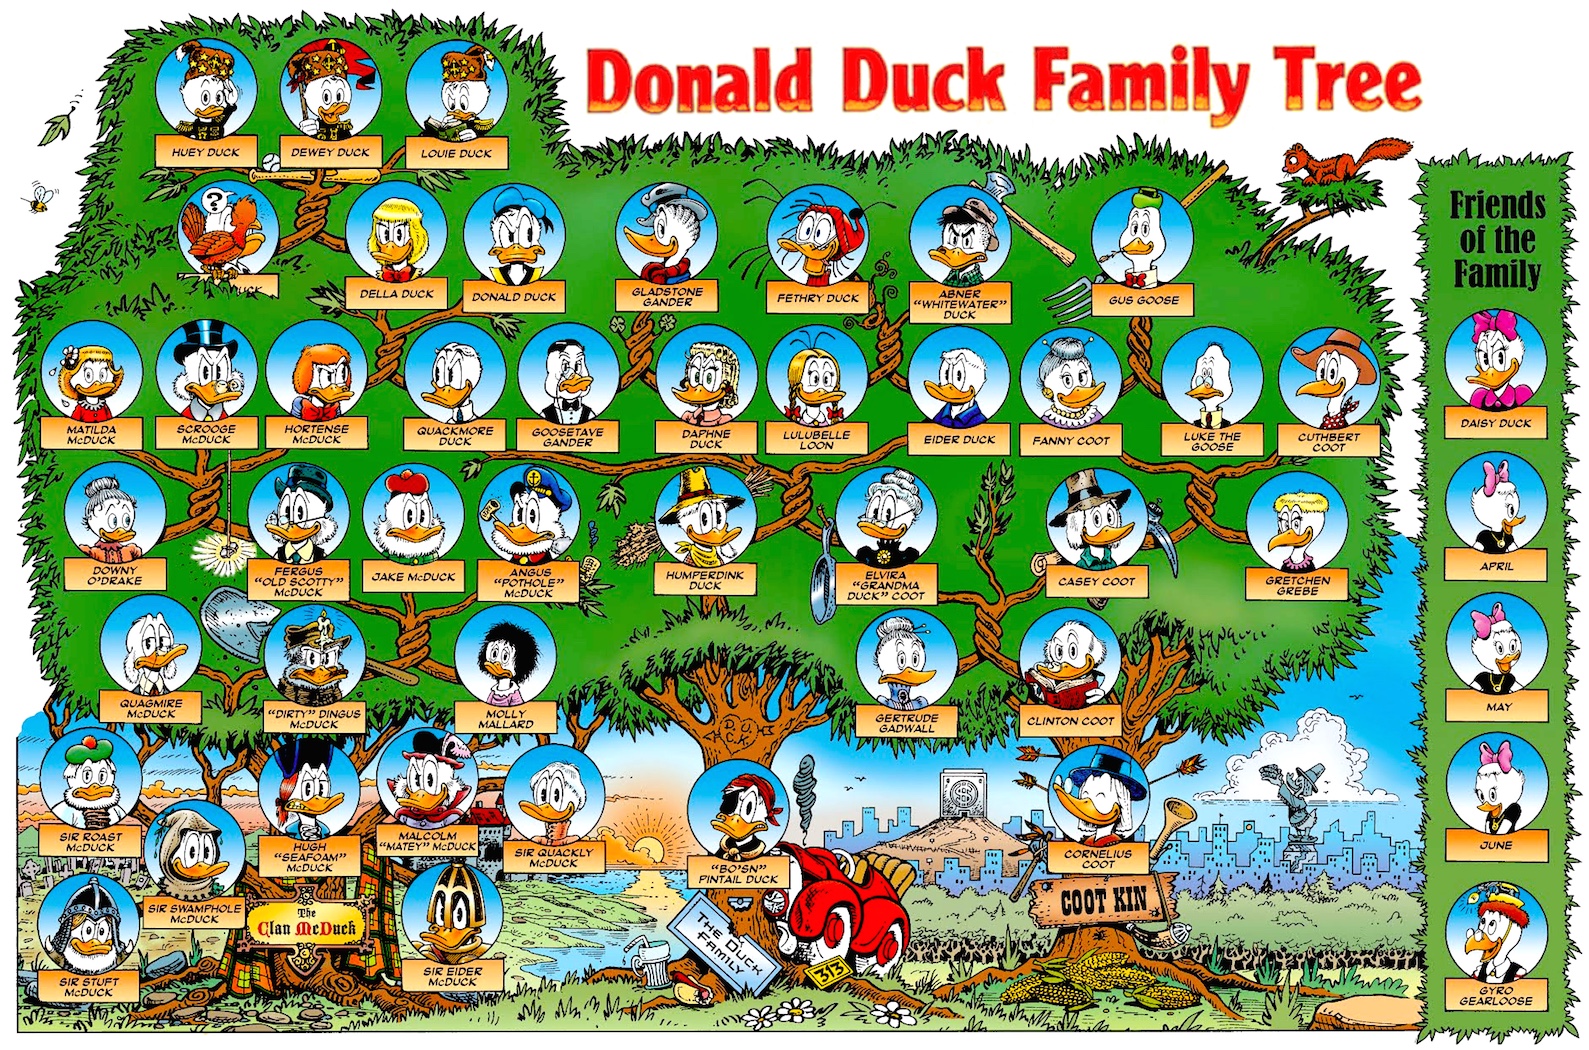 Donald Duck 3